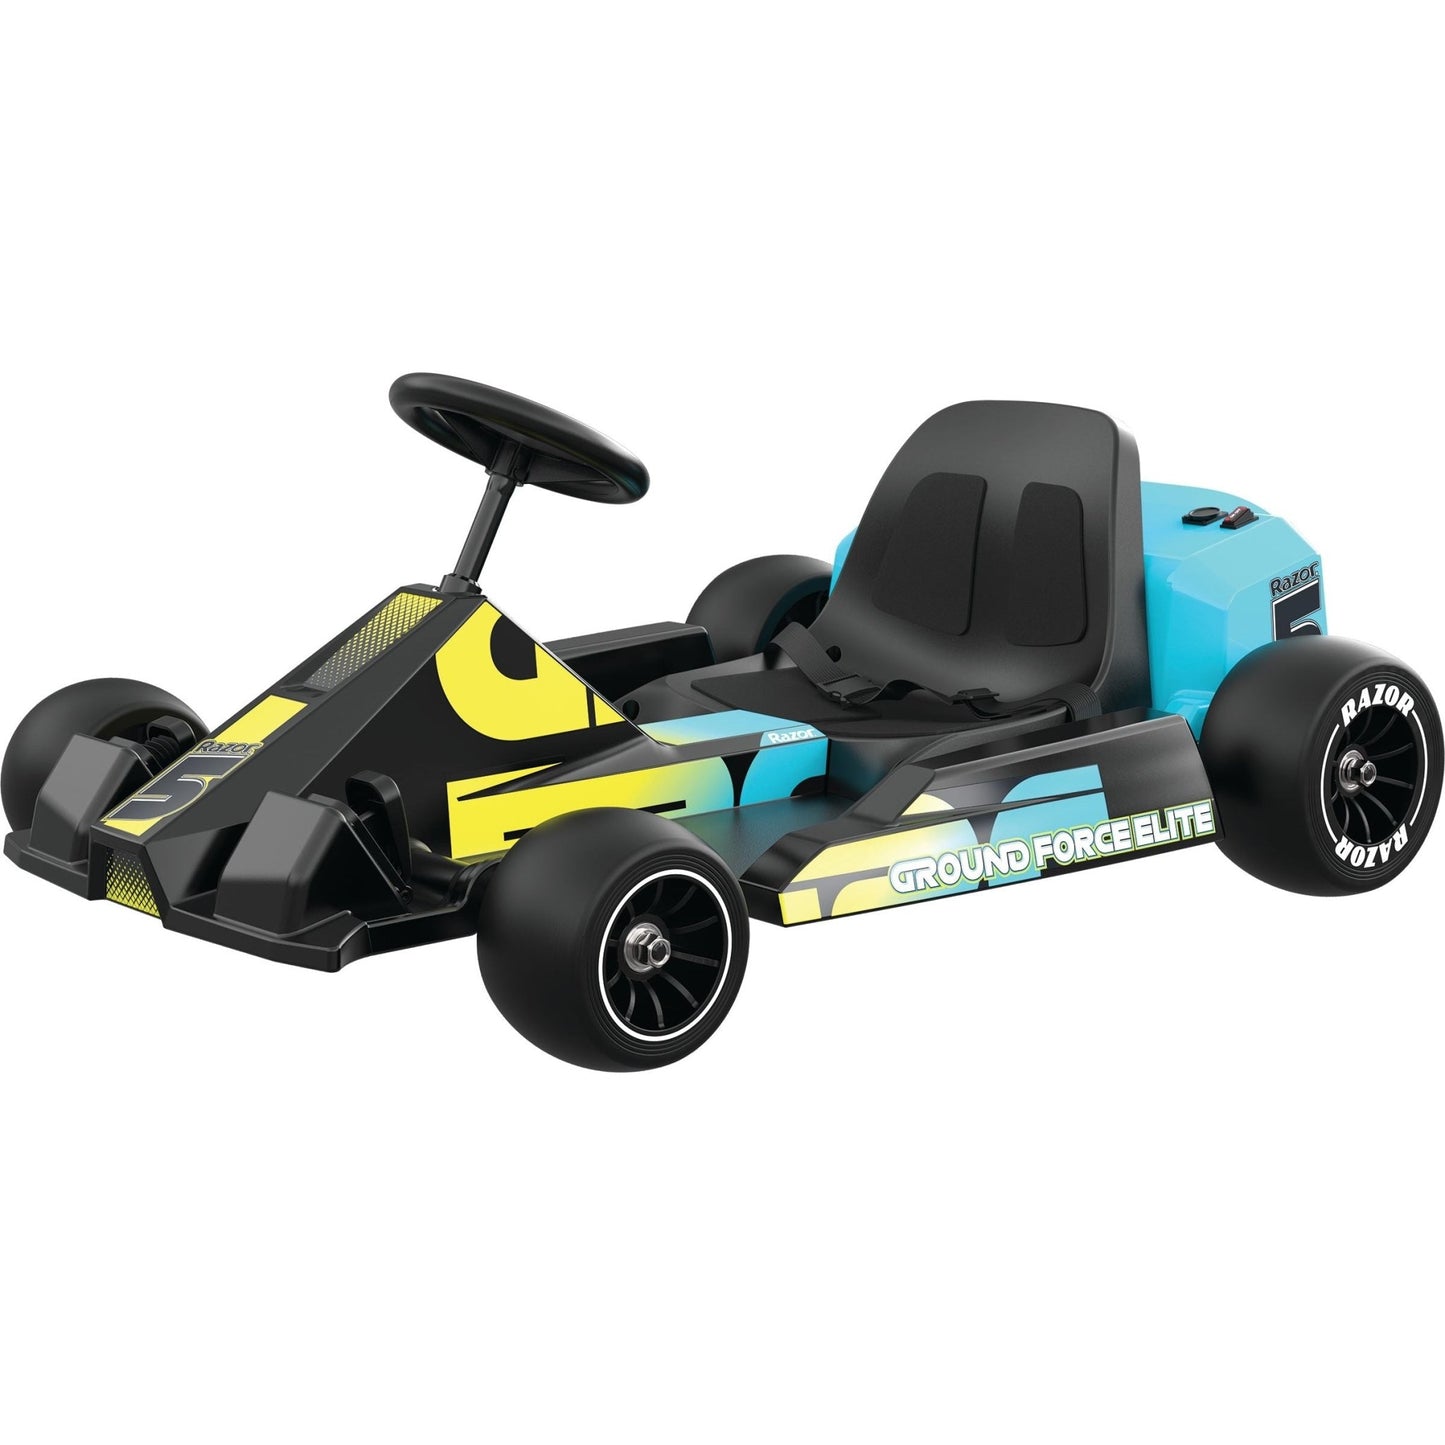 Razor Ground Force Elite Go Kart - The Online Toy Shop - Electric Kart - 9